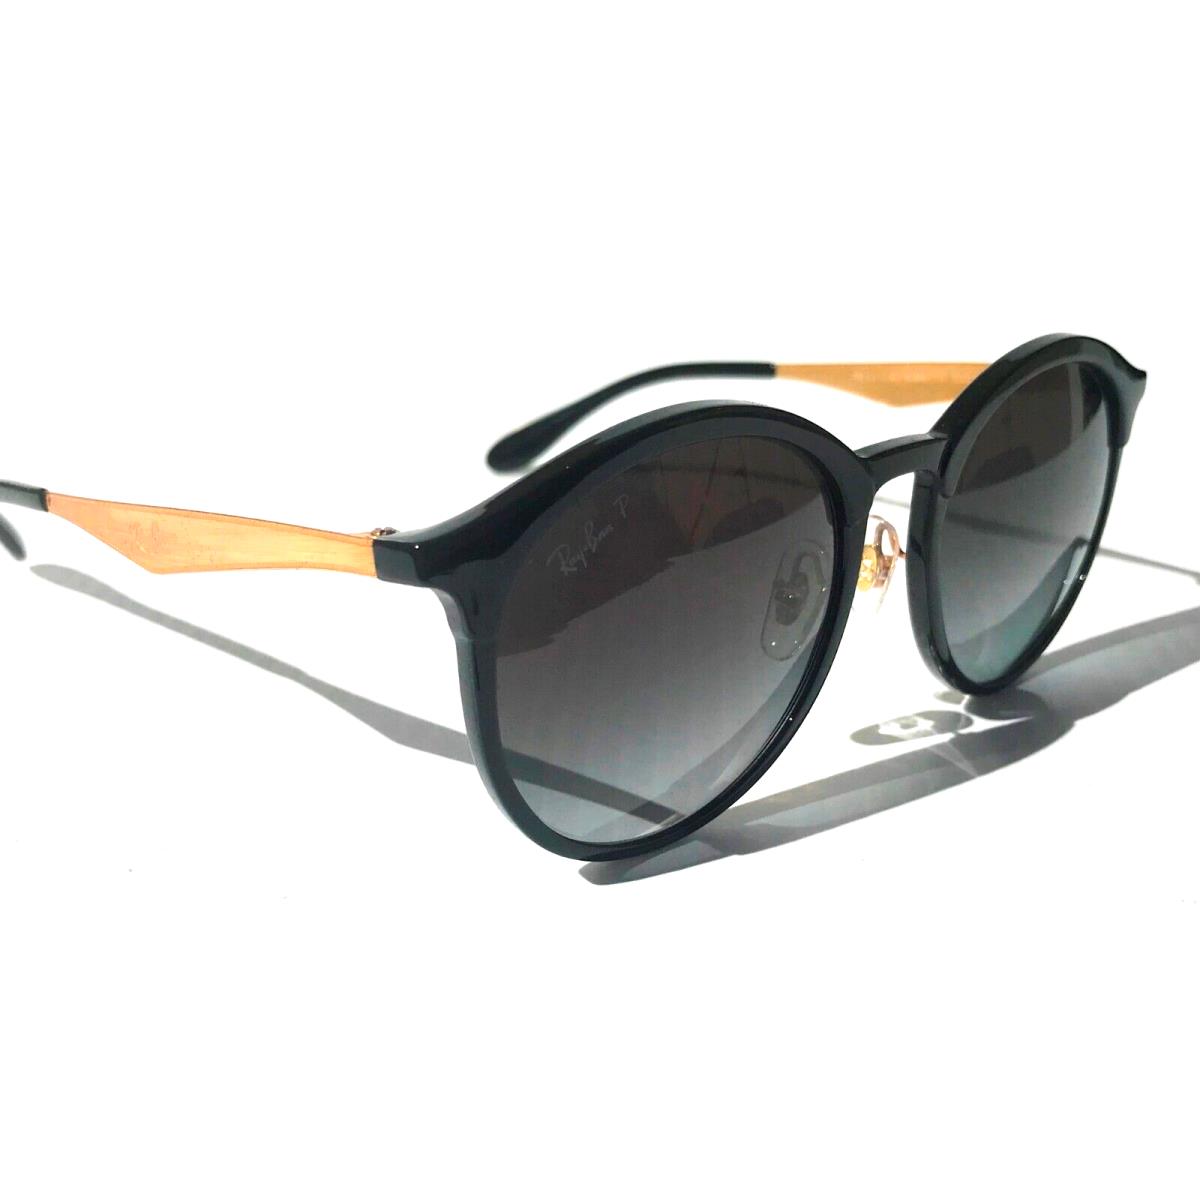 Ray-Ban sunglasses Emma - Frame: Black and Gold, Lens: Grey 7